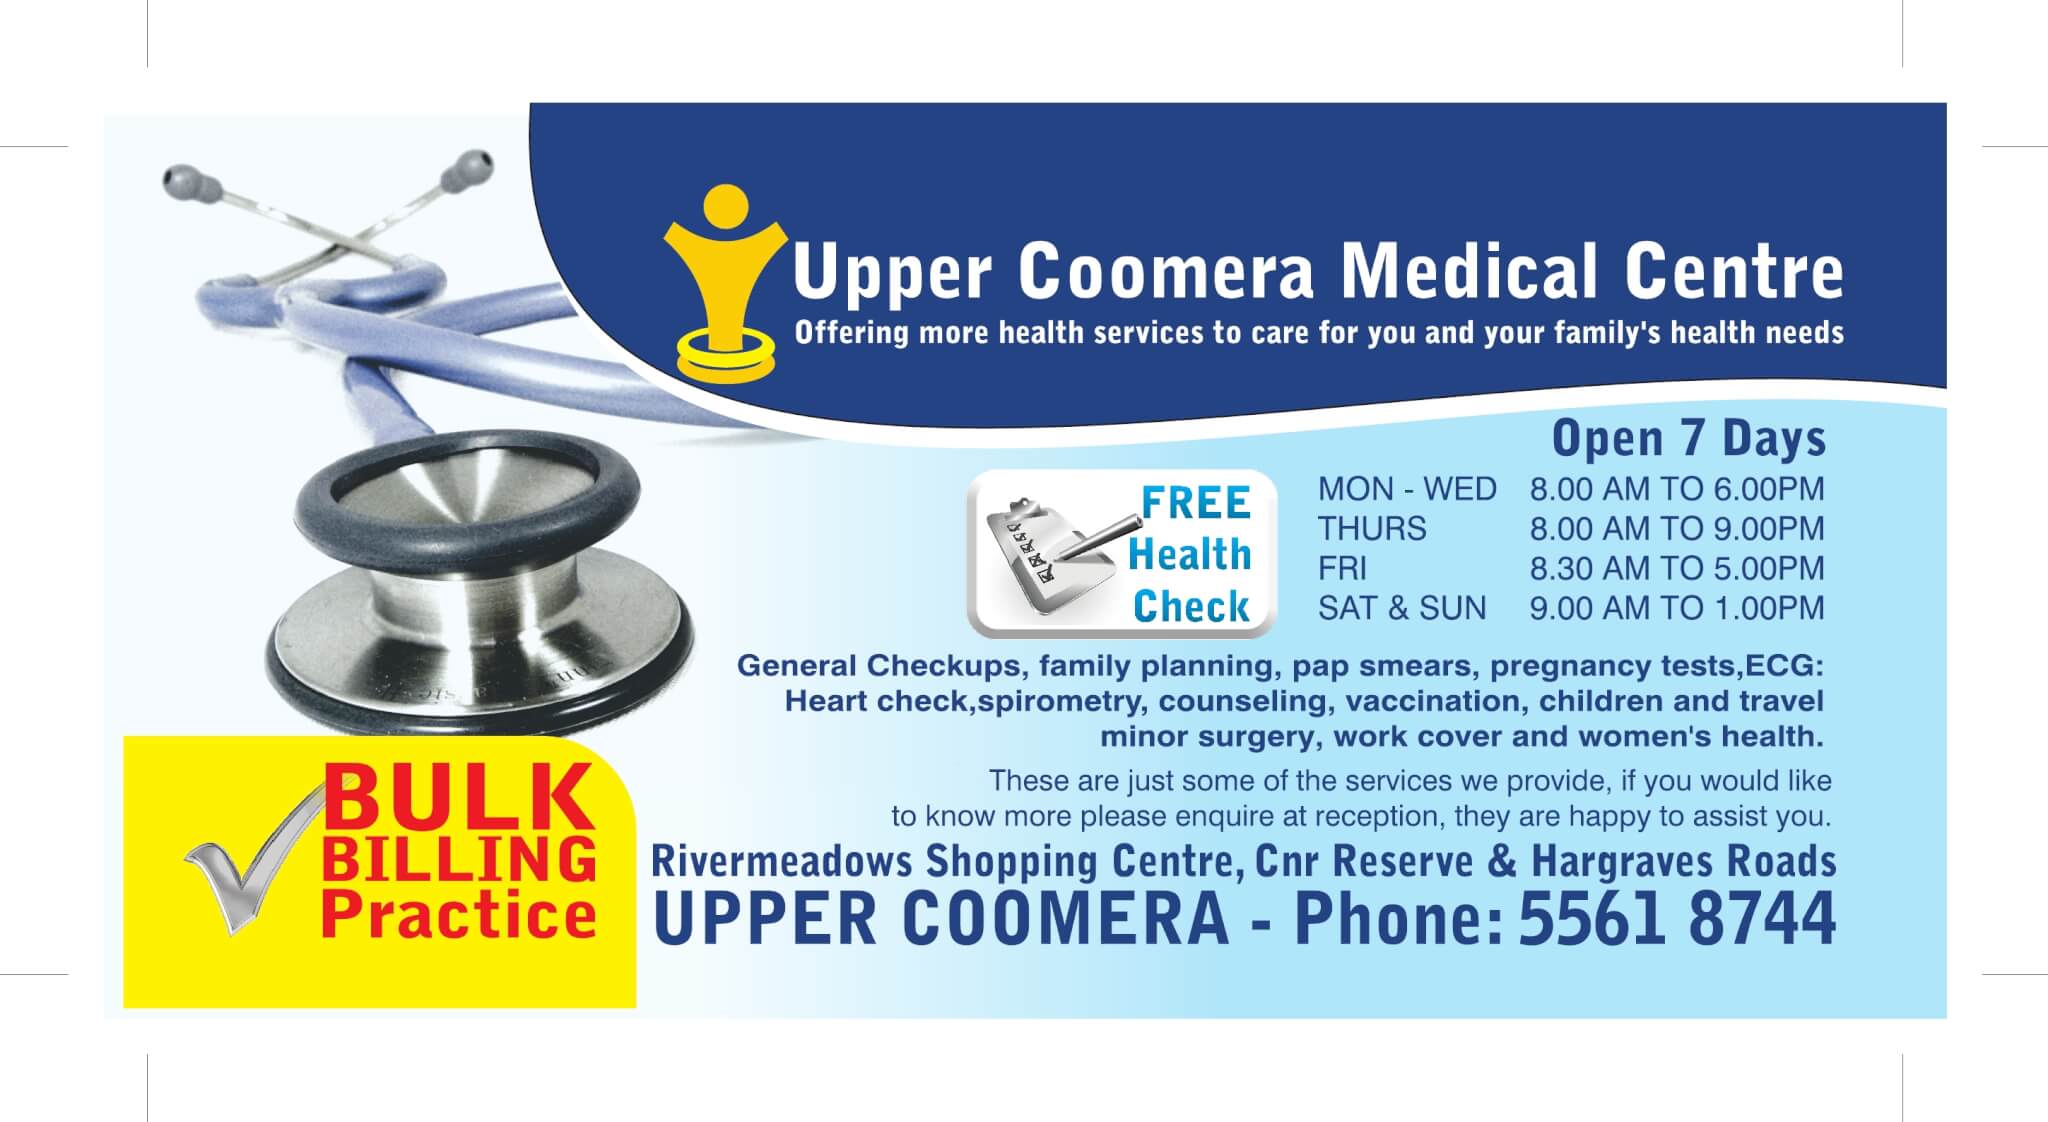 coomera medical advertising flyer